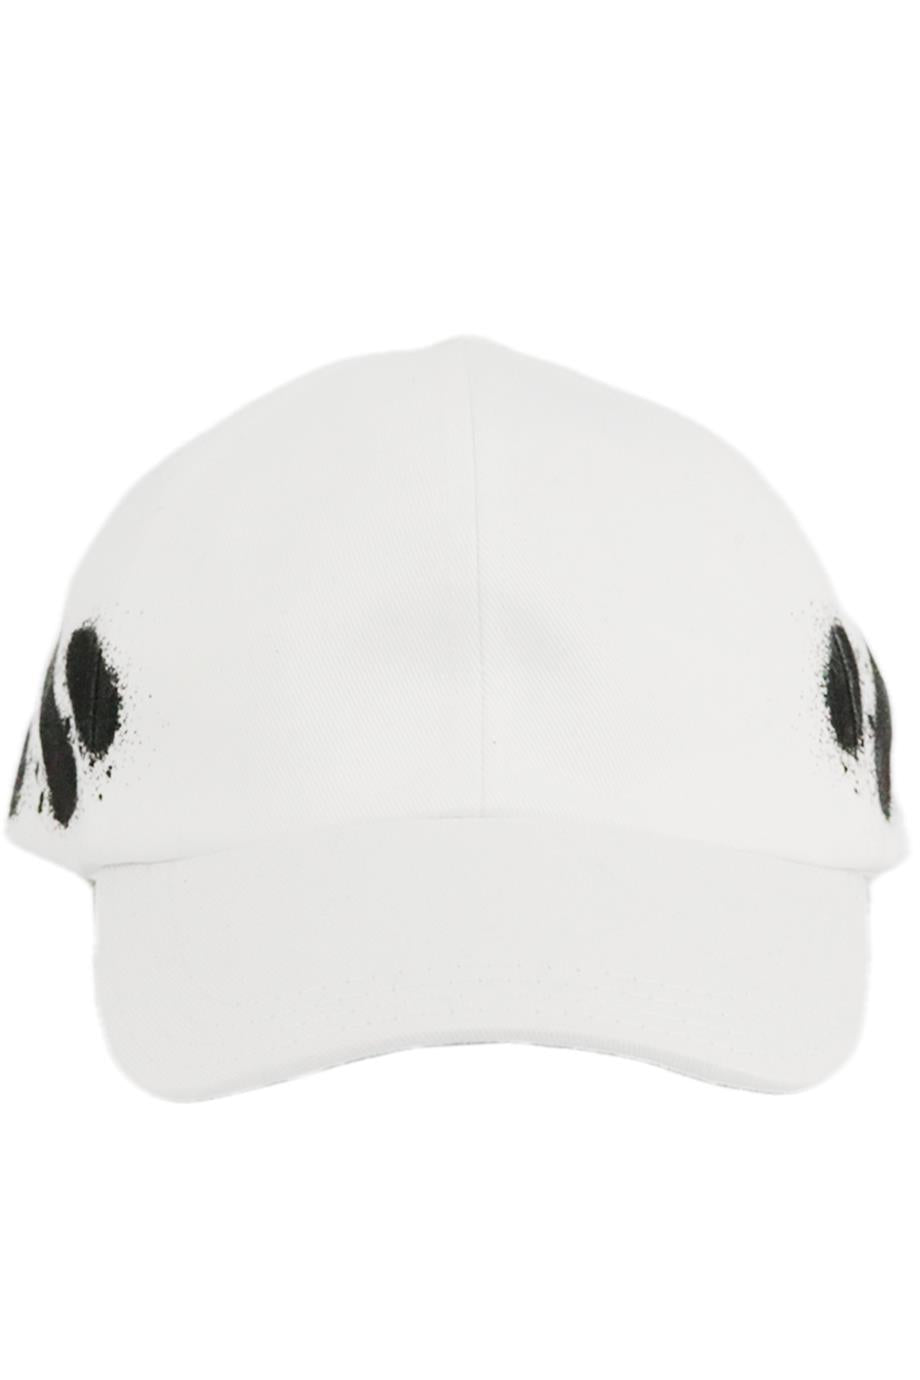 OFF-WHITE C/O VIRGIL ABLOH BASEBALL COTTON CAP PRINTED TWILL nikkibradford ONE SIZE 